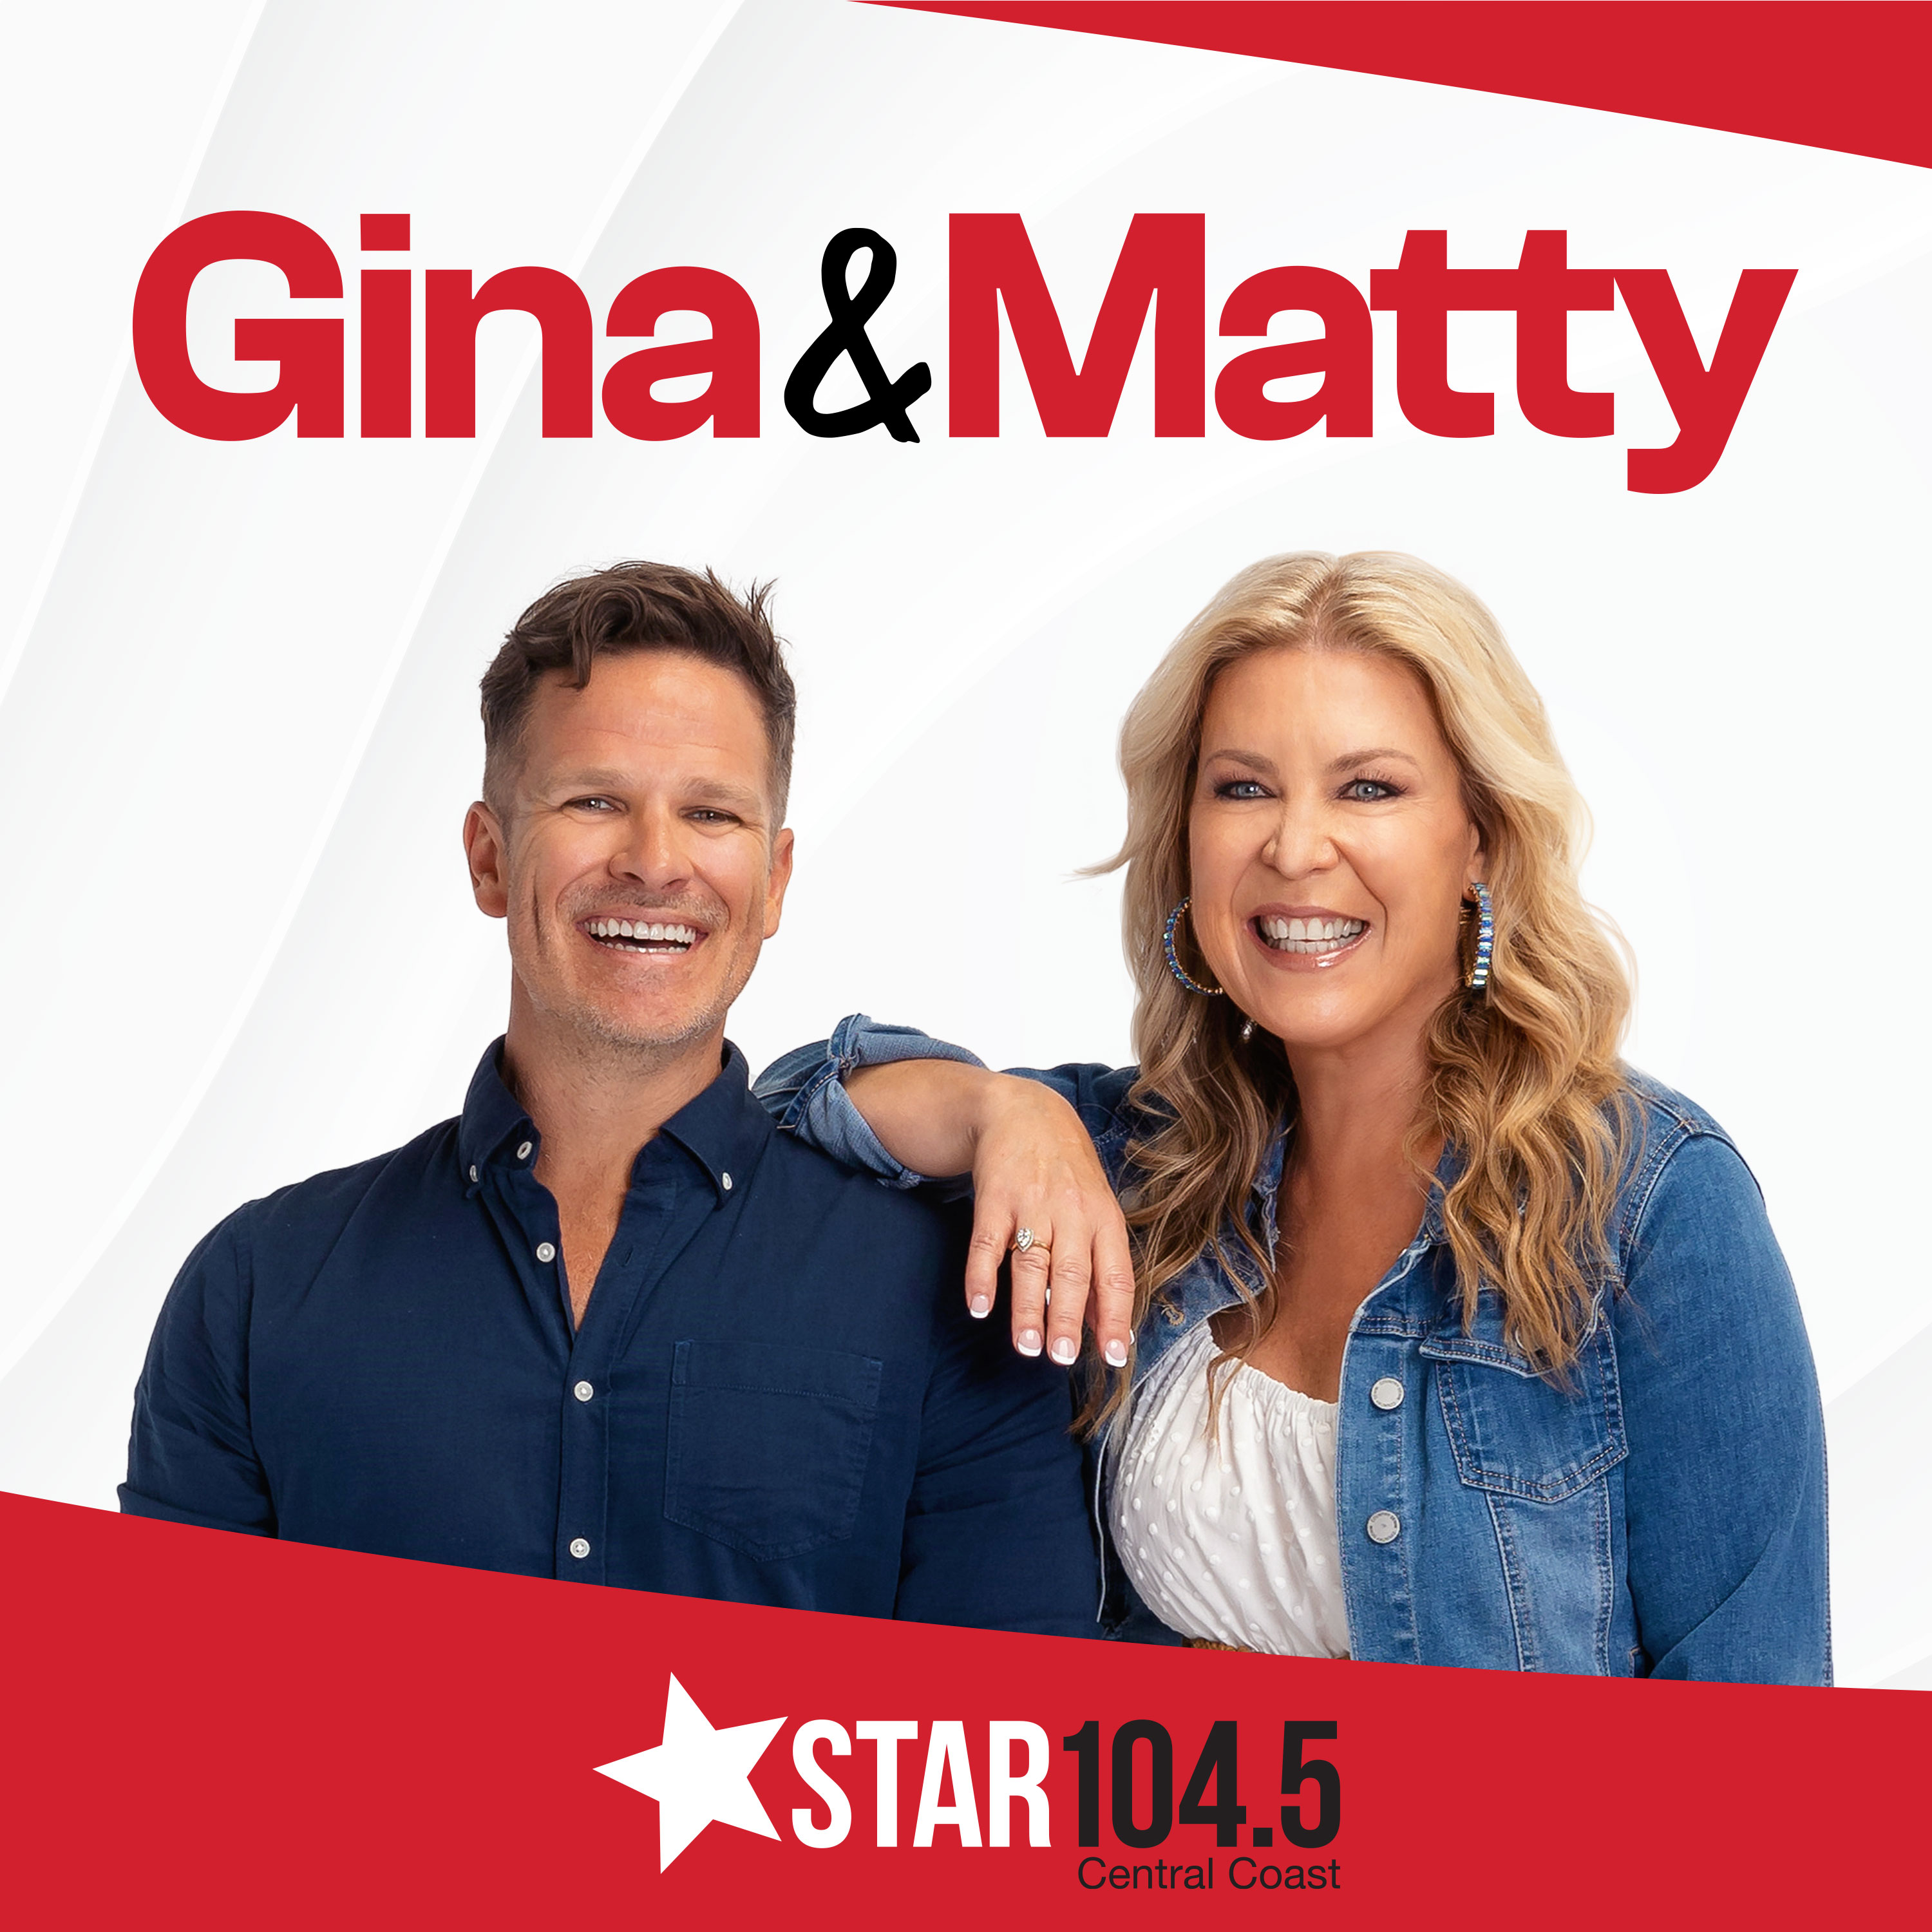 Gina & Matty Host Their Very Own Biggest Morning Tea